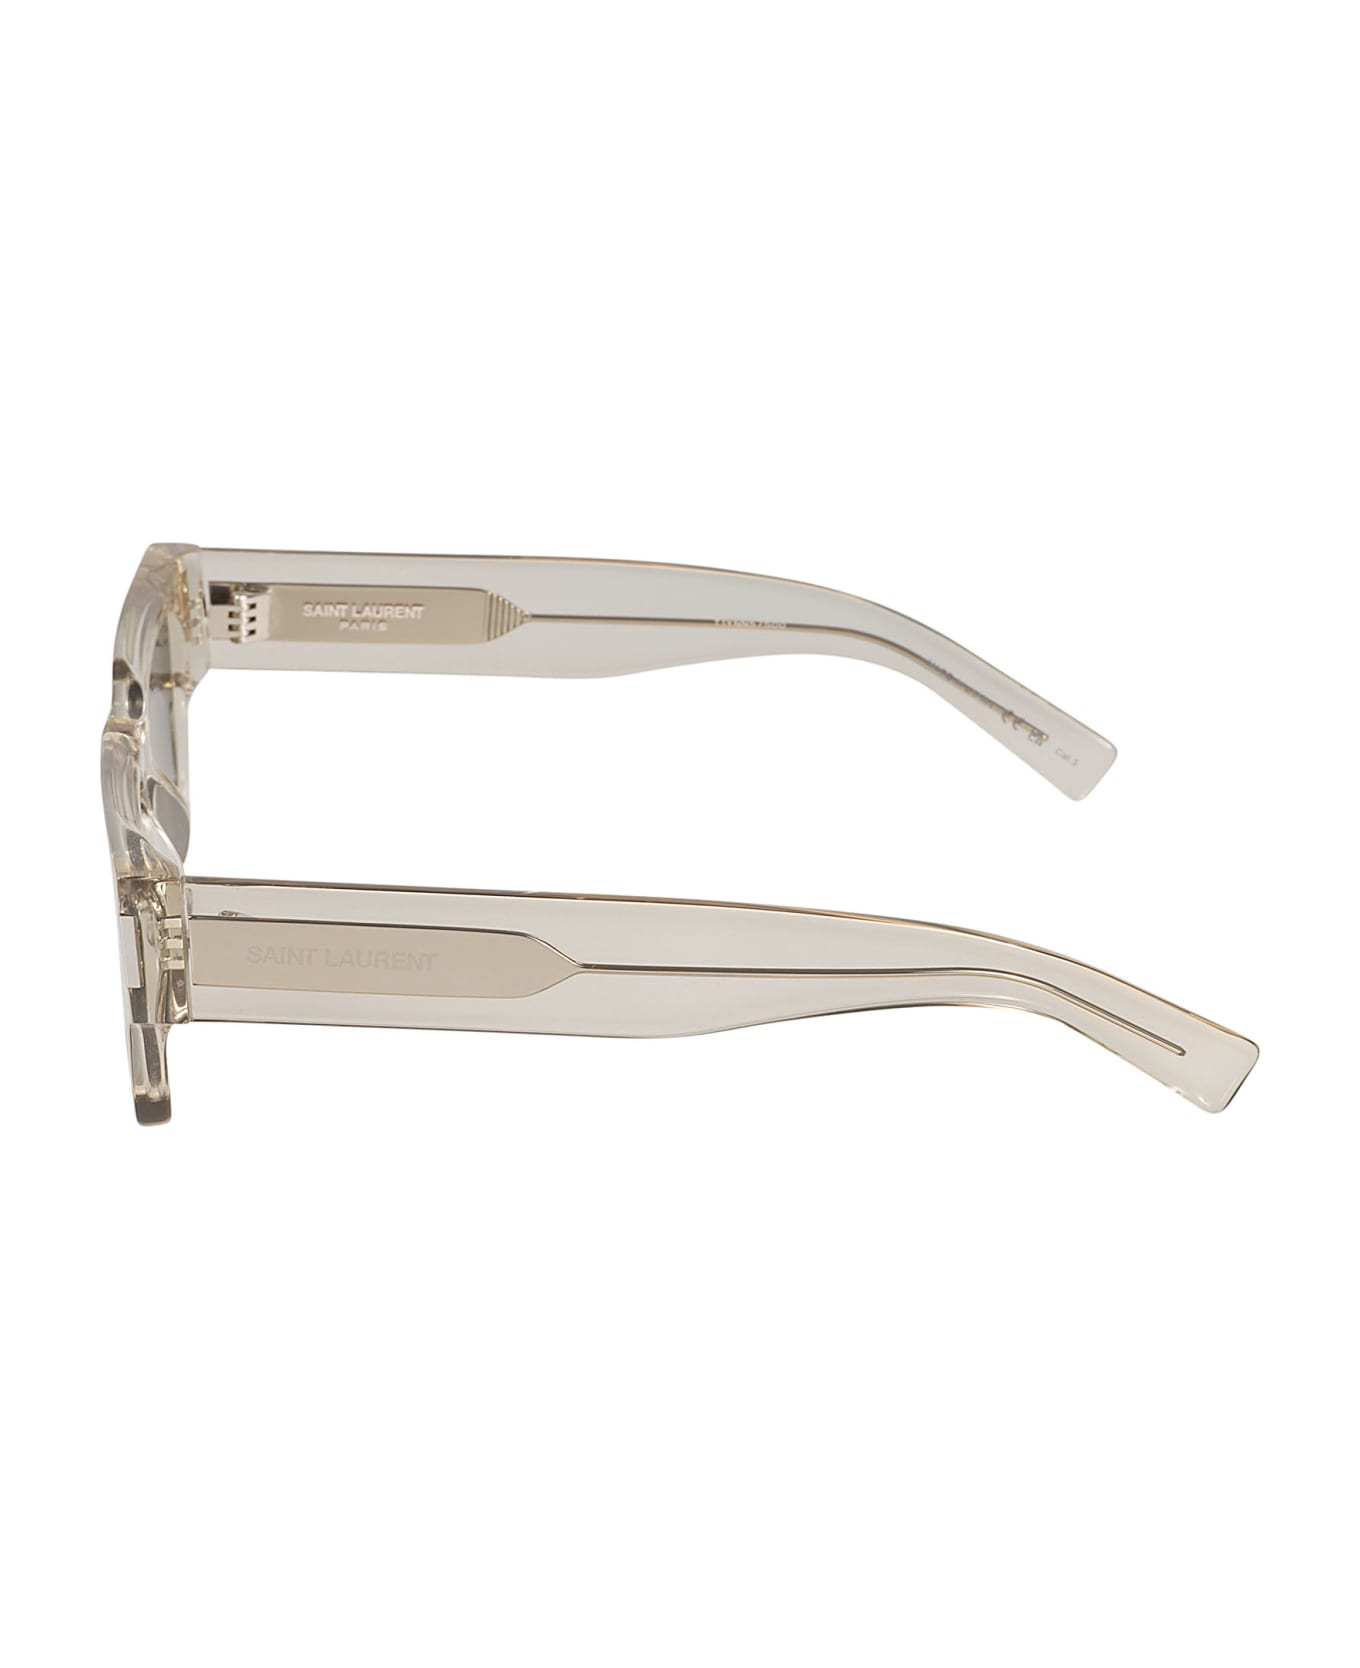 Saint Laurent Eyewear Square Frame Transparent Sunglasses - Beige/Silver